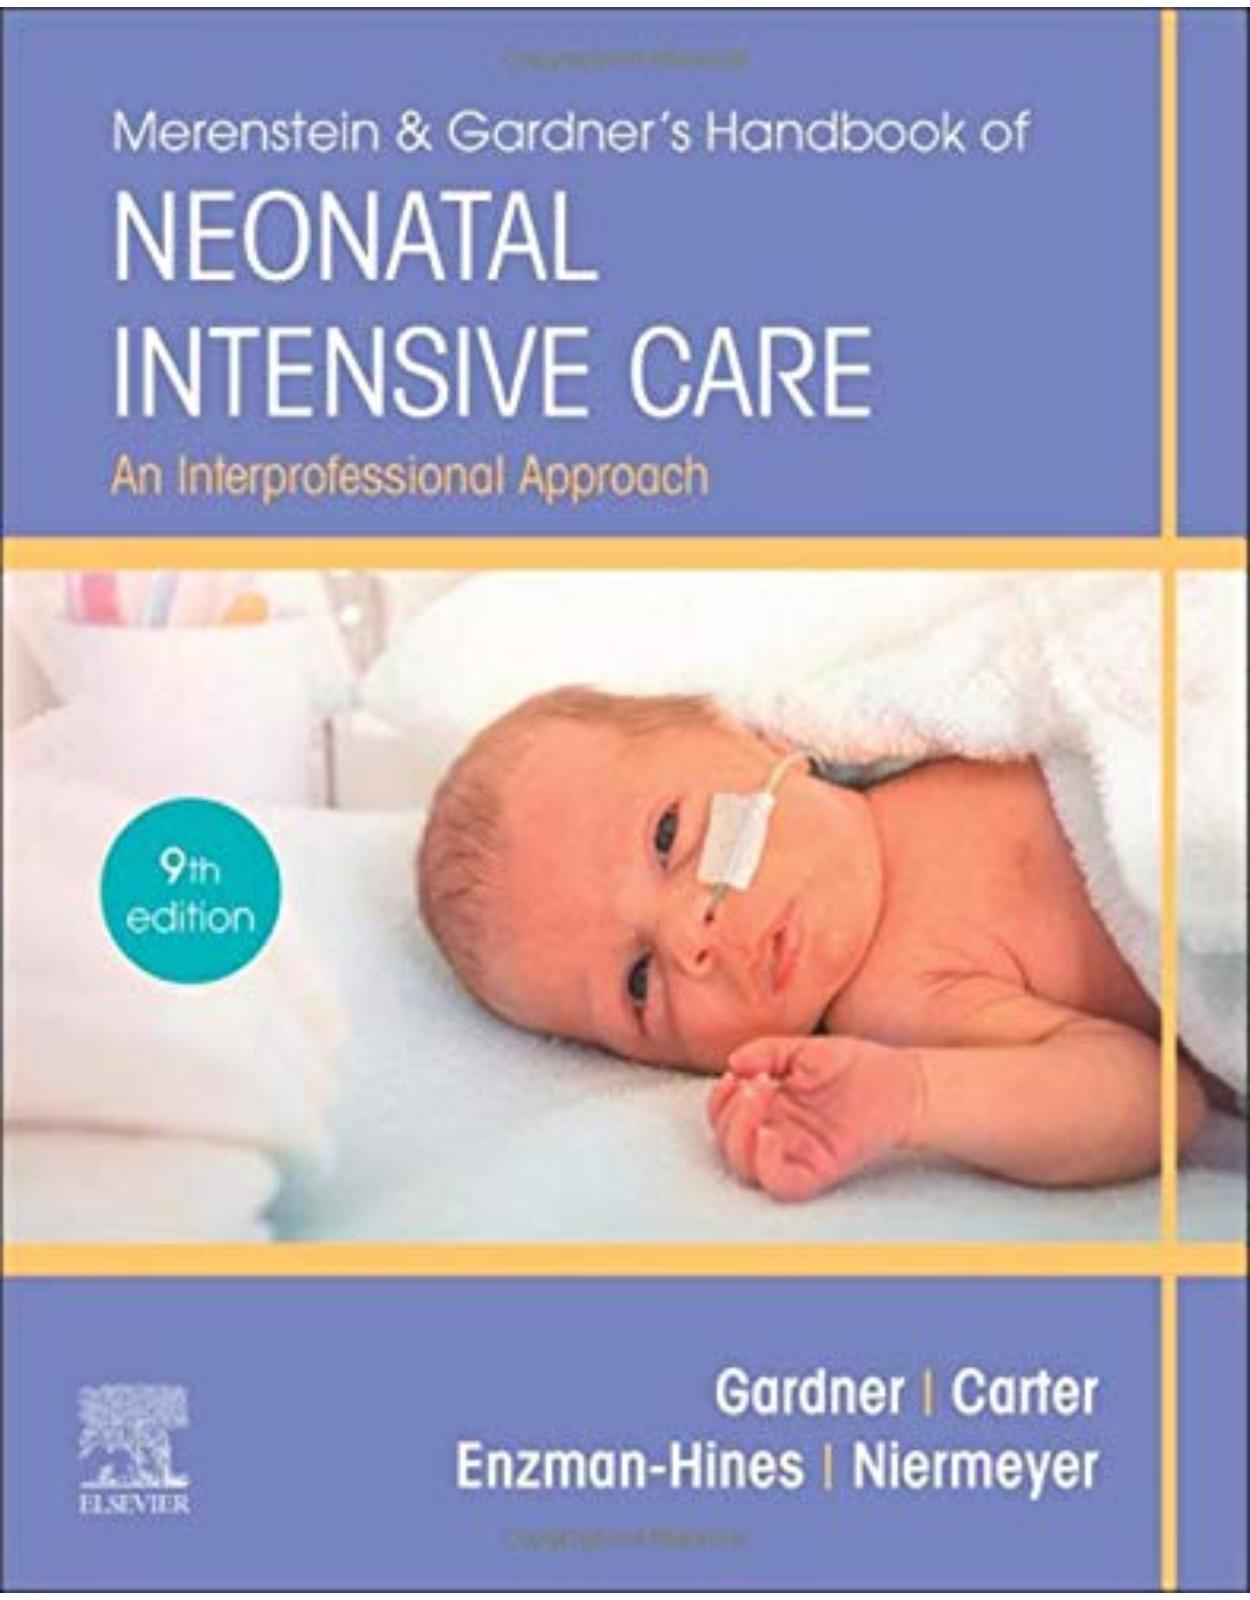 Merenstein & Gardner’s Handbook of Neonatal Intensive Care: An Interprofessional Approach 